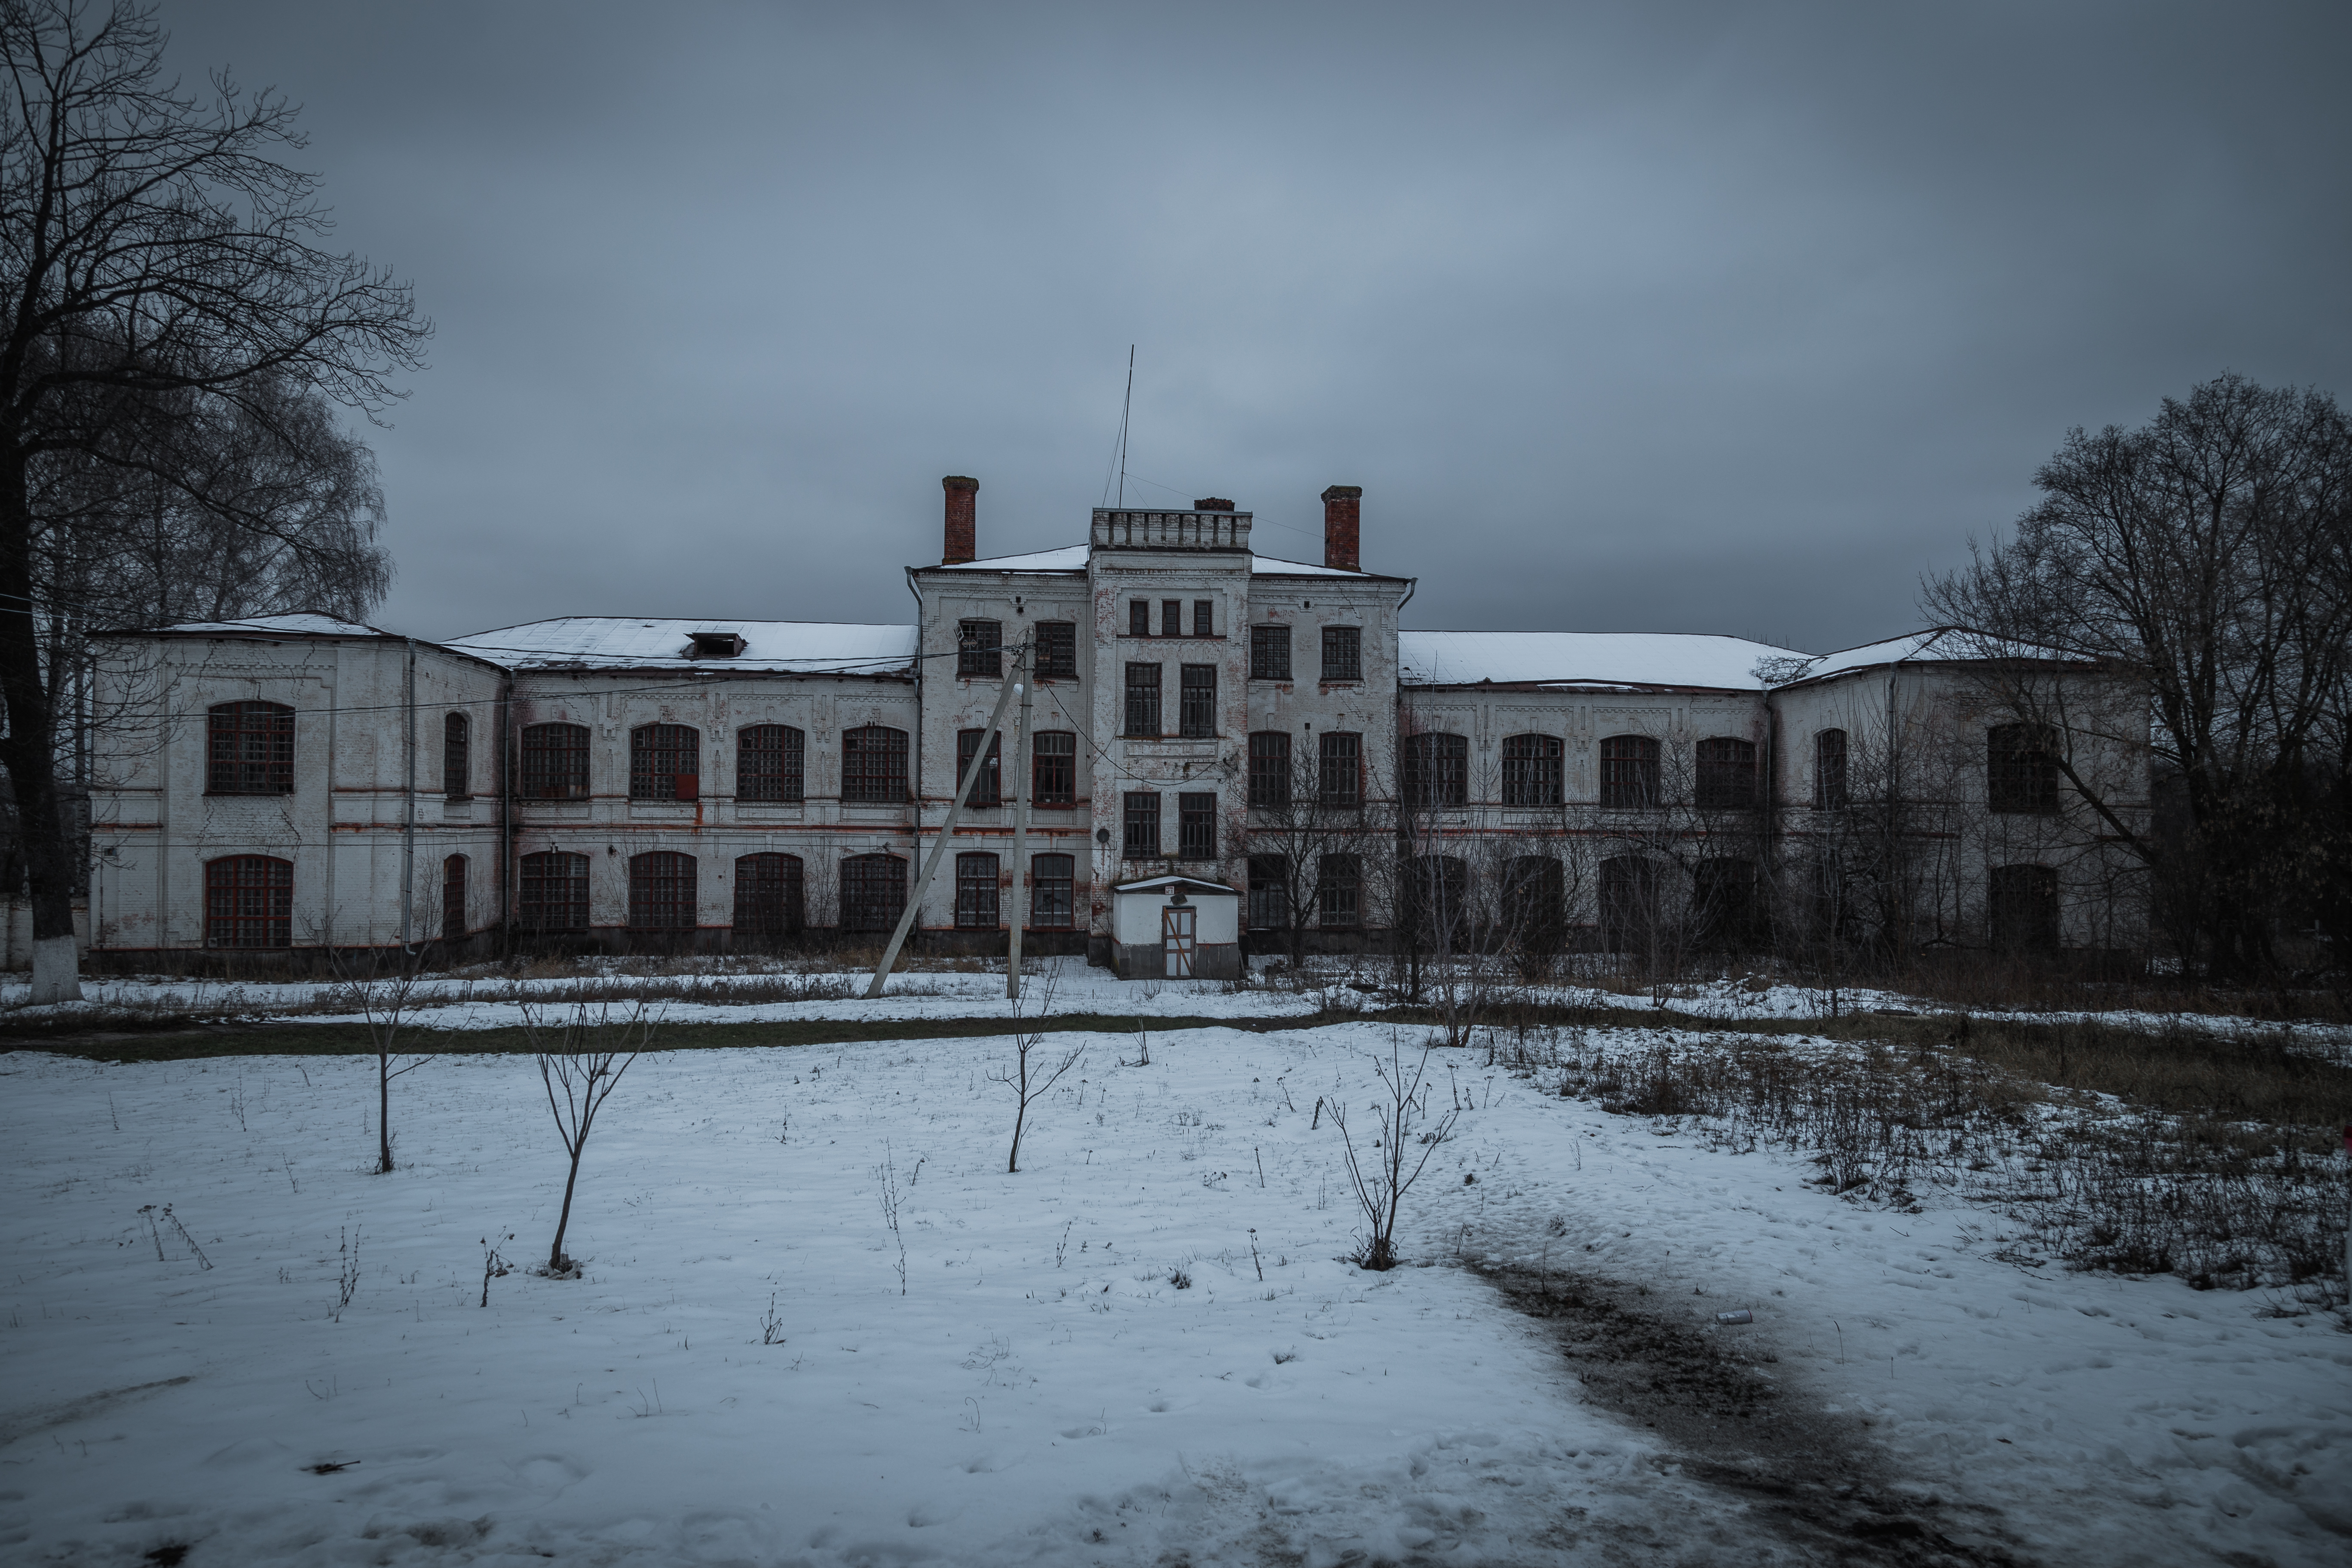 Dark and creepy abandoned haunted mental hospital. | Source: Shutterstock